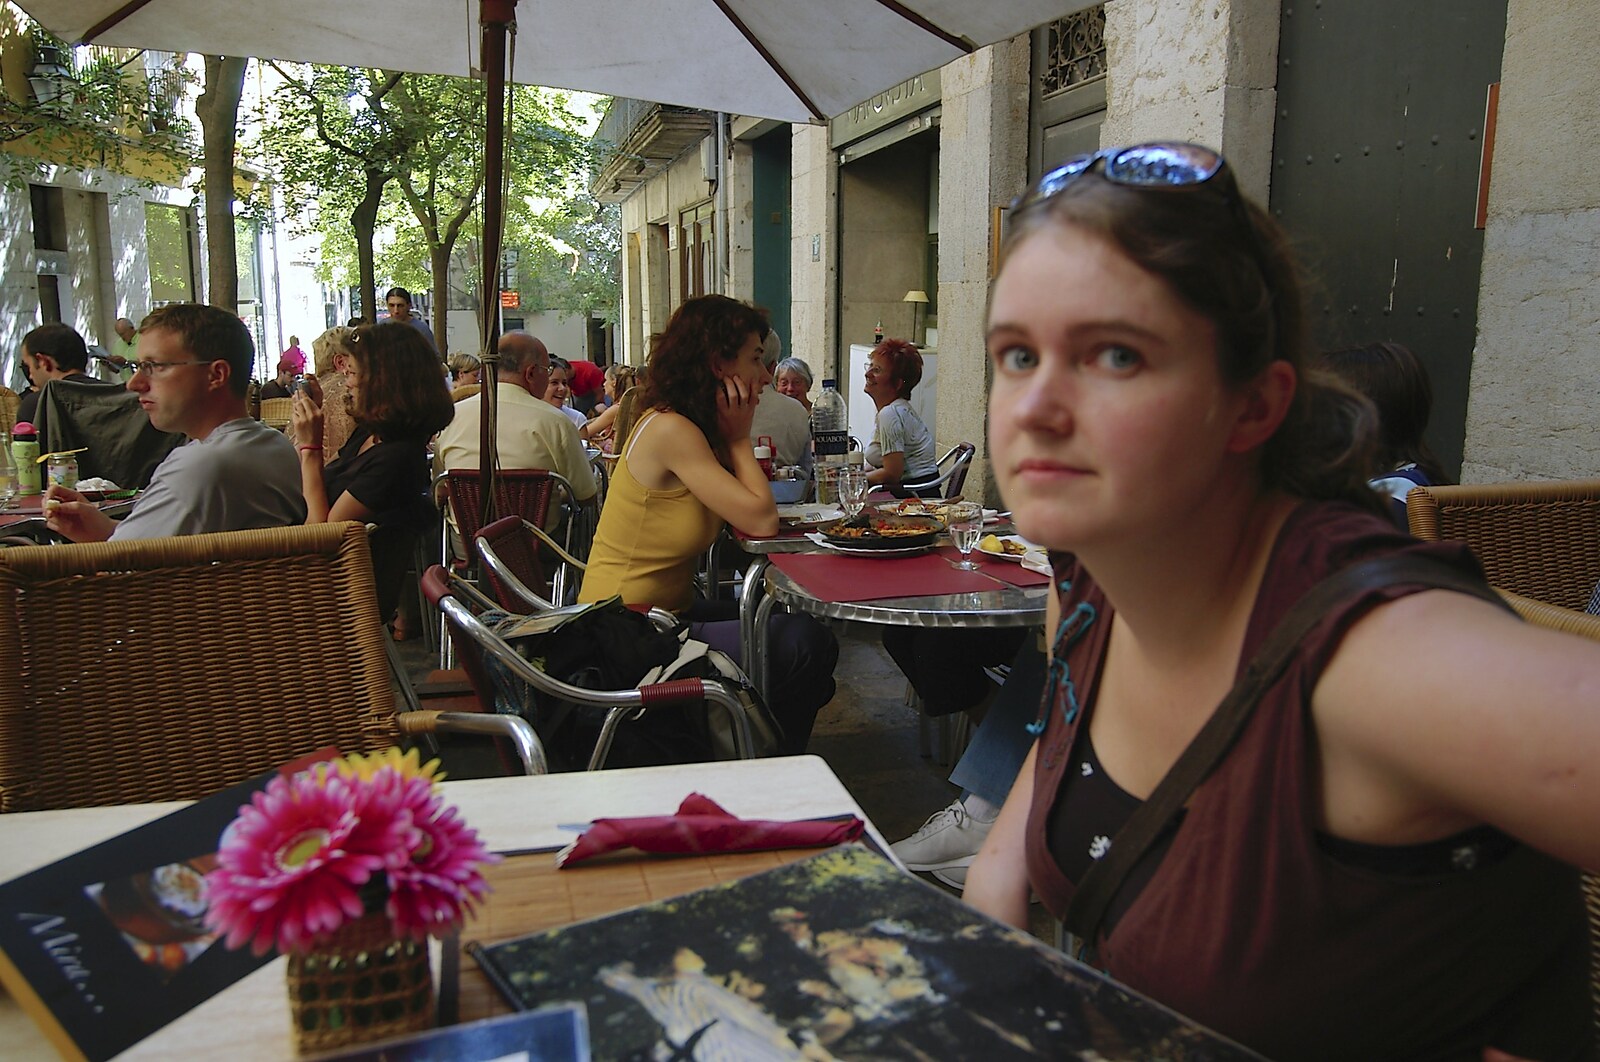 Isobel at a café table from Girona, Catalunya, Spain - 17th September 2006